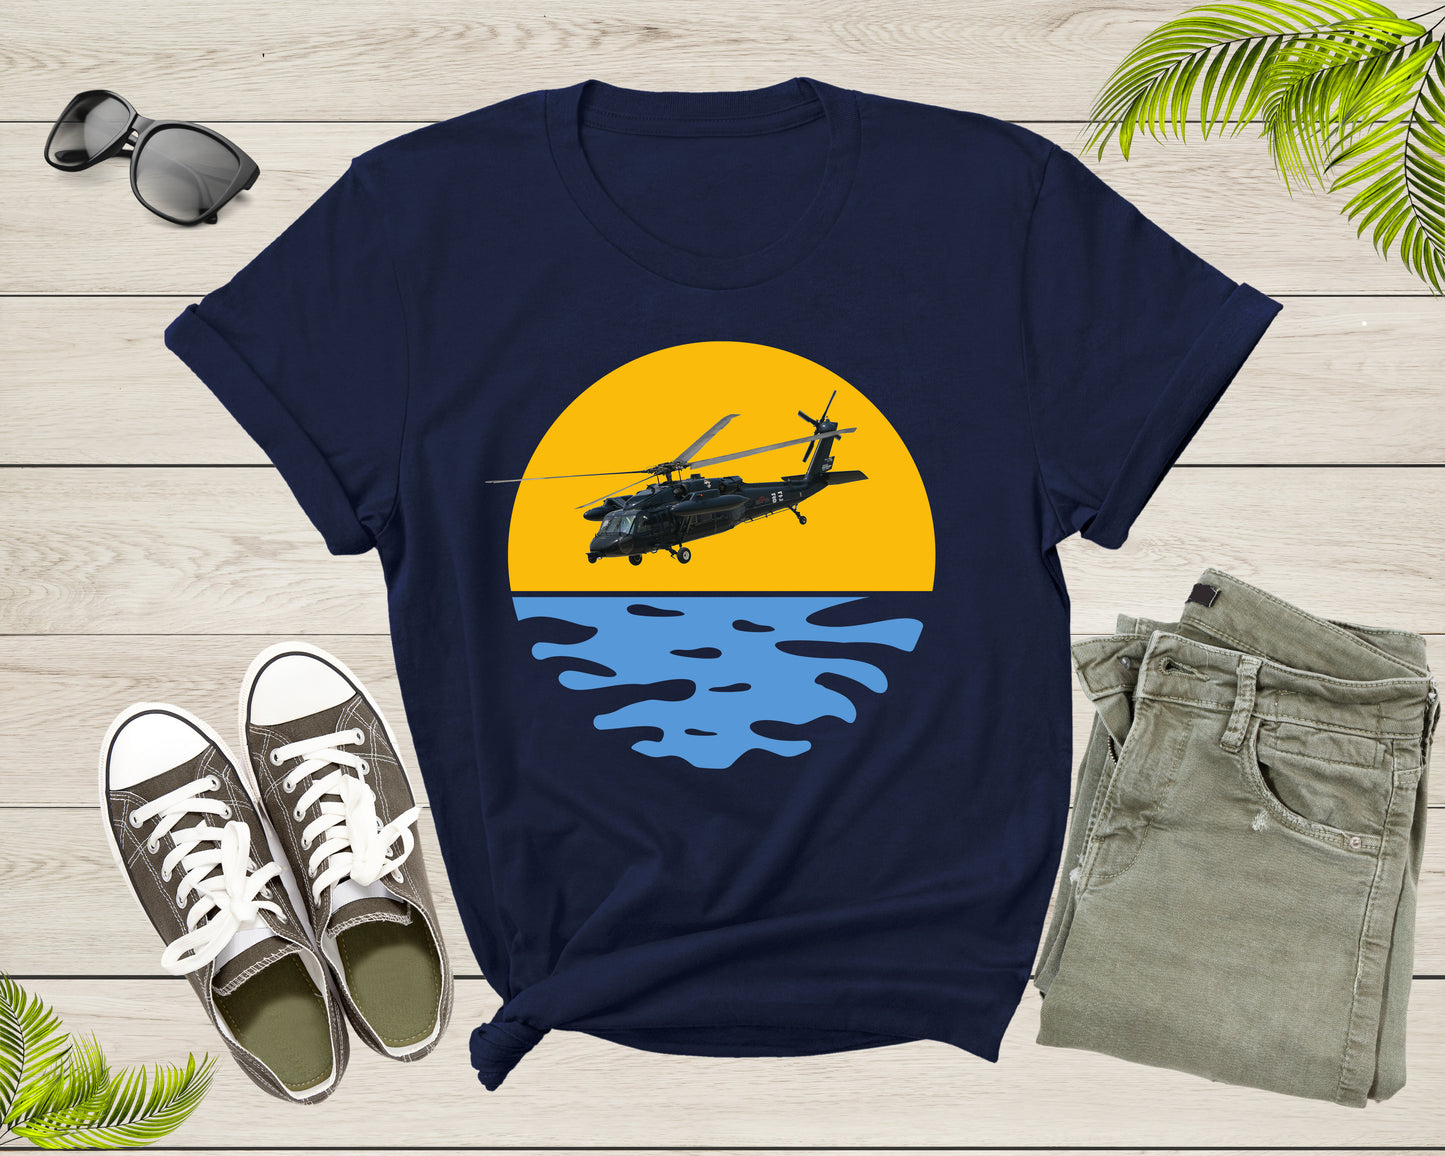 UH-60 Sea Helicopter Chopper Sikorsky Flying at Sunset T-Shirt Pilot Aviator Aviation Gift T Shirt for Men Women Boys Girls Teens Tshirt